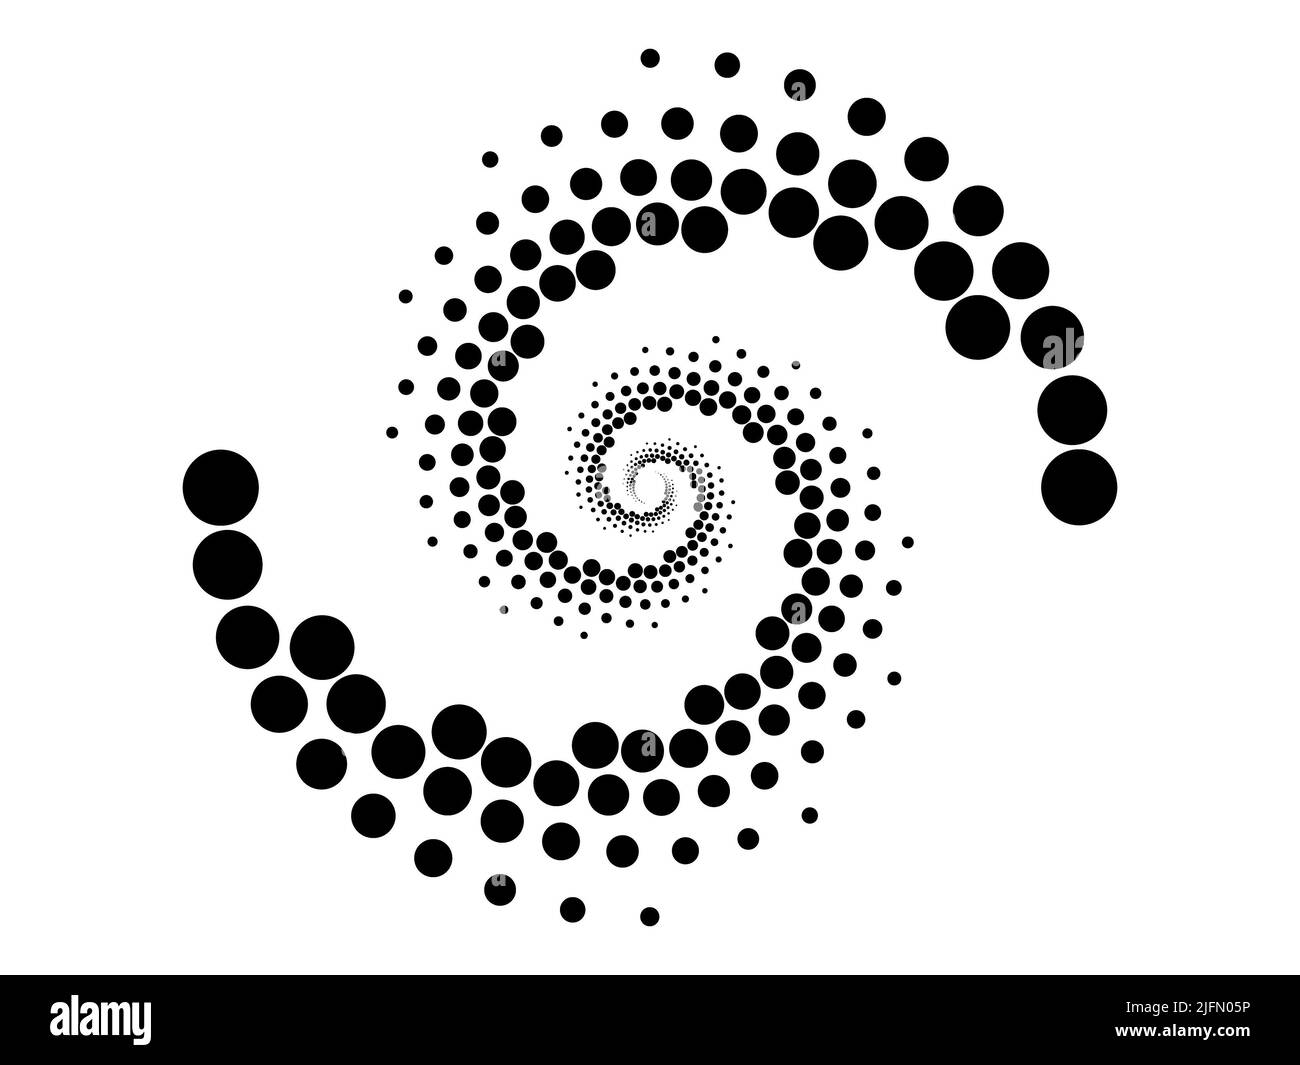 Halftone background design with black circles Stock Photo